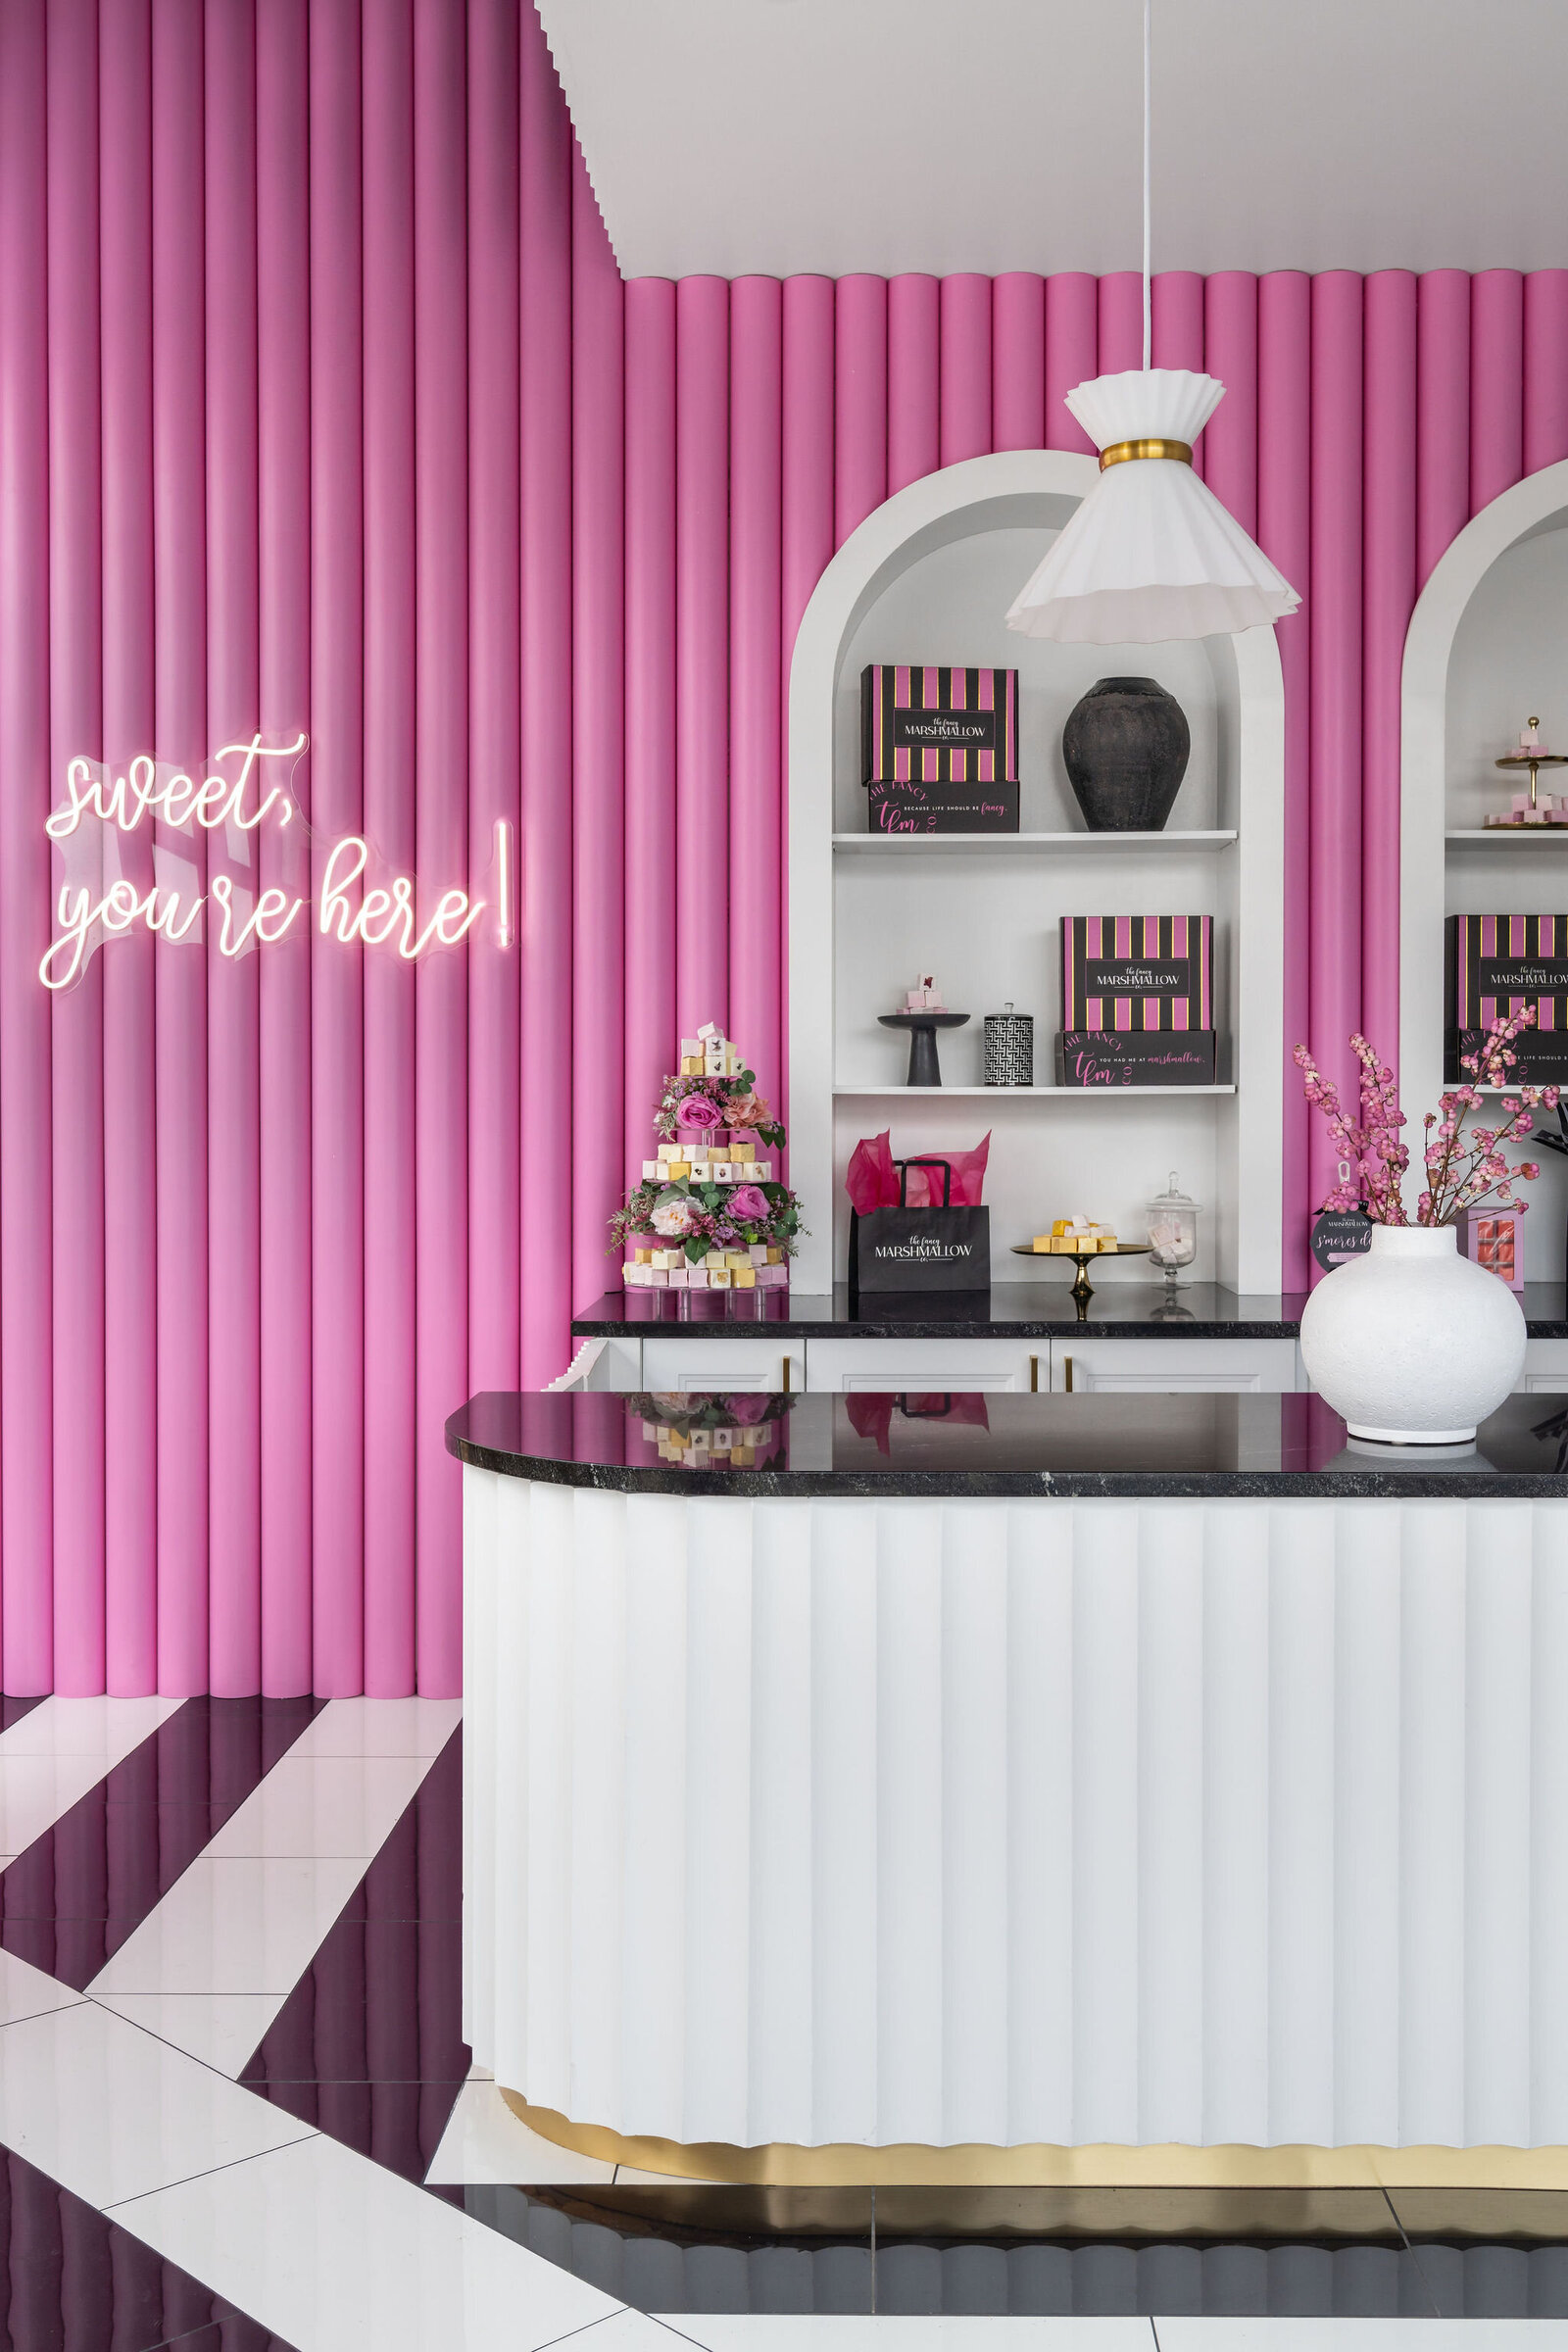 Nuela_Designs_Retail_Interior_Design_Pink_White_Black